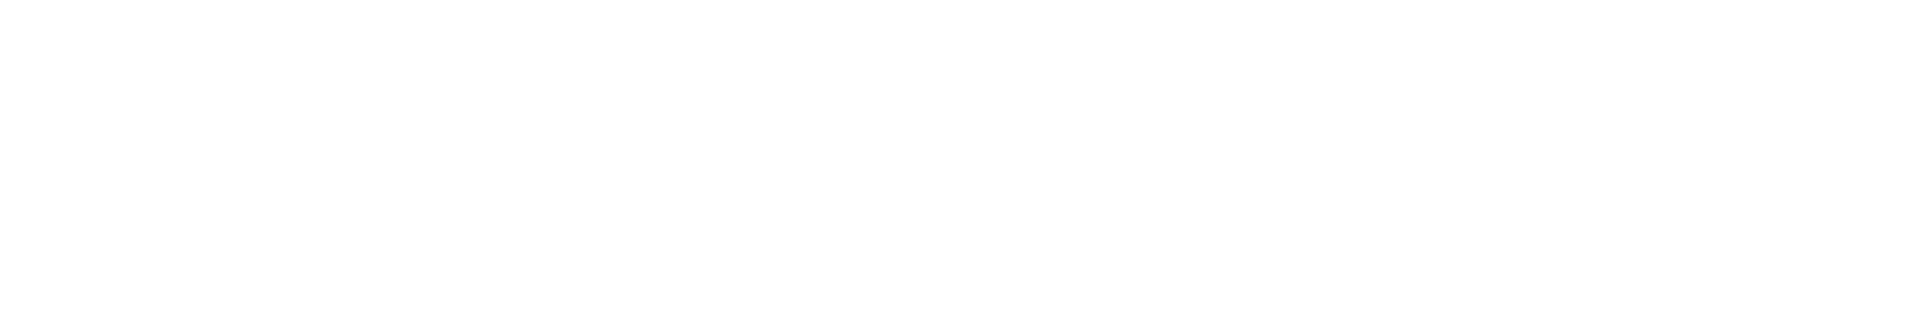 Bvlgari Hotels & Resorts logo